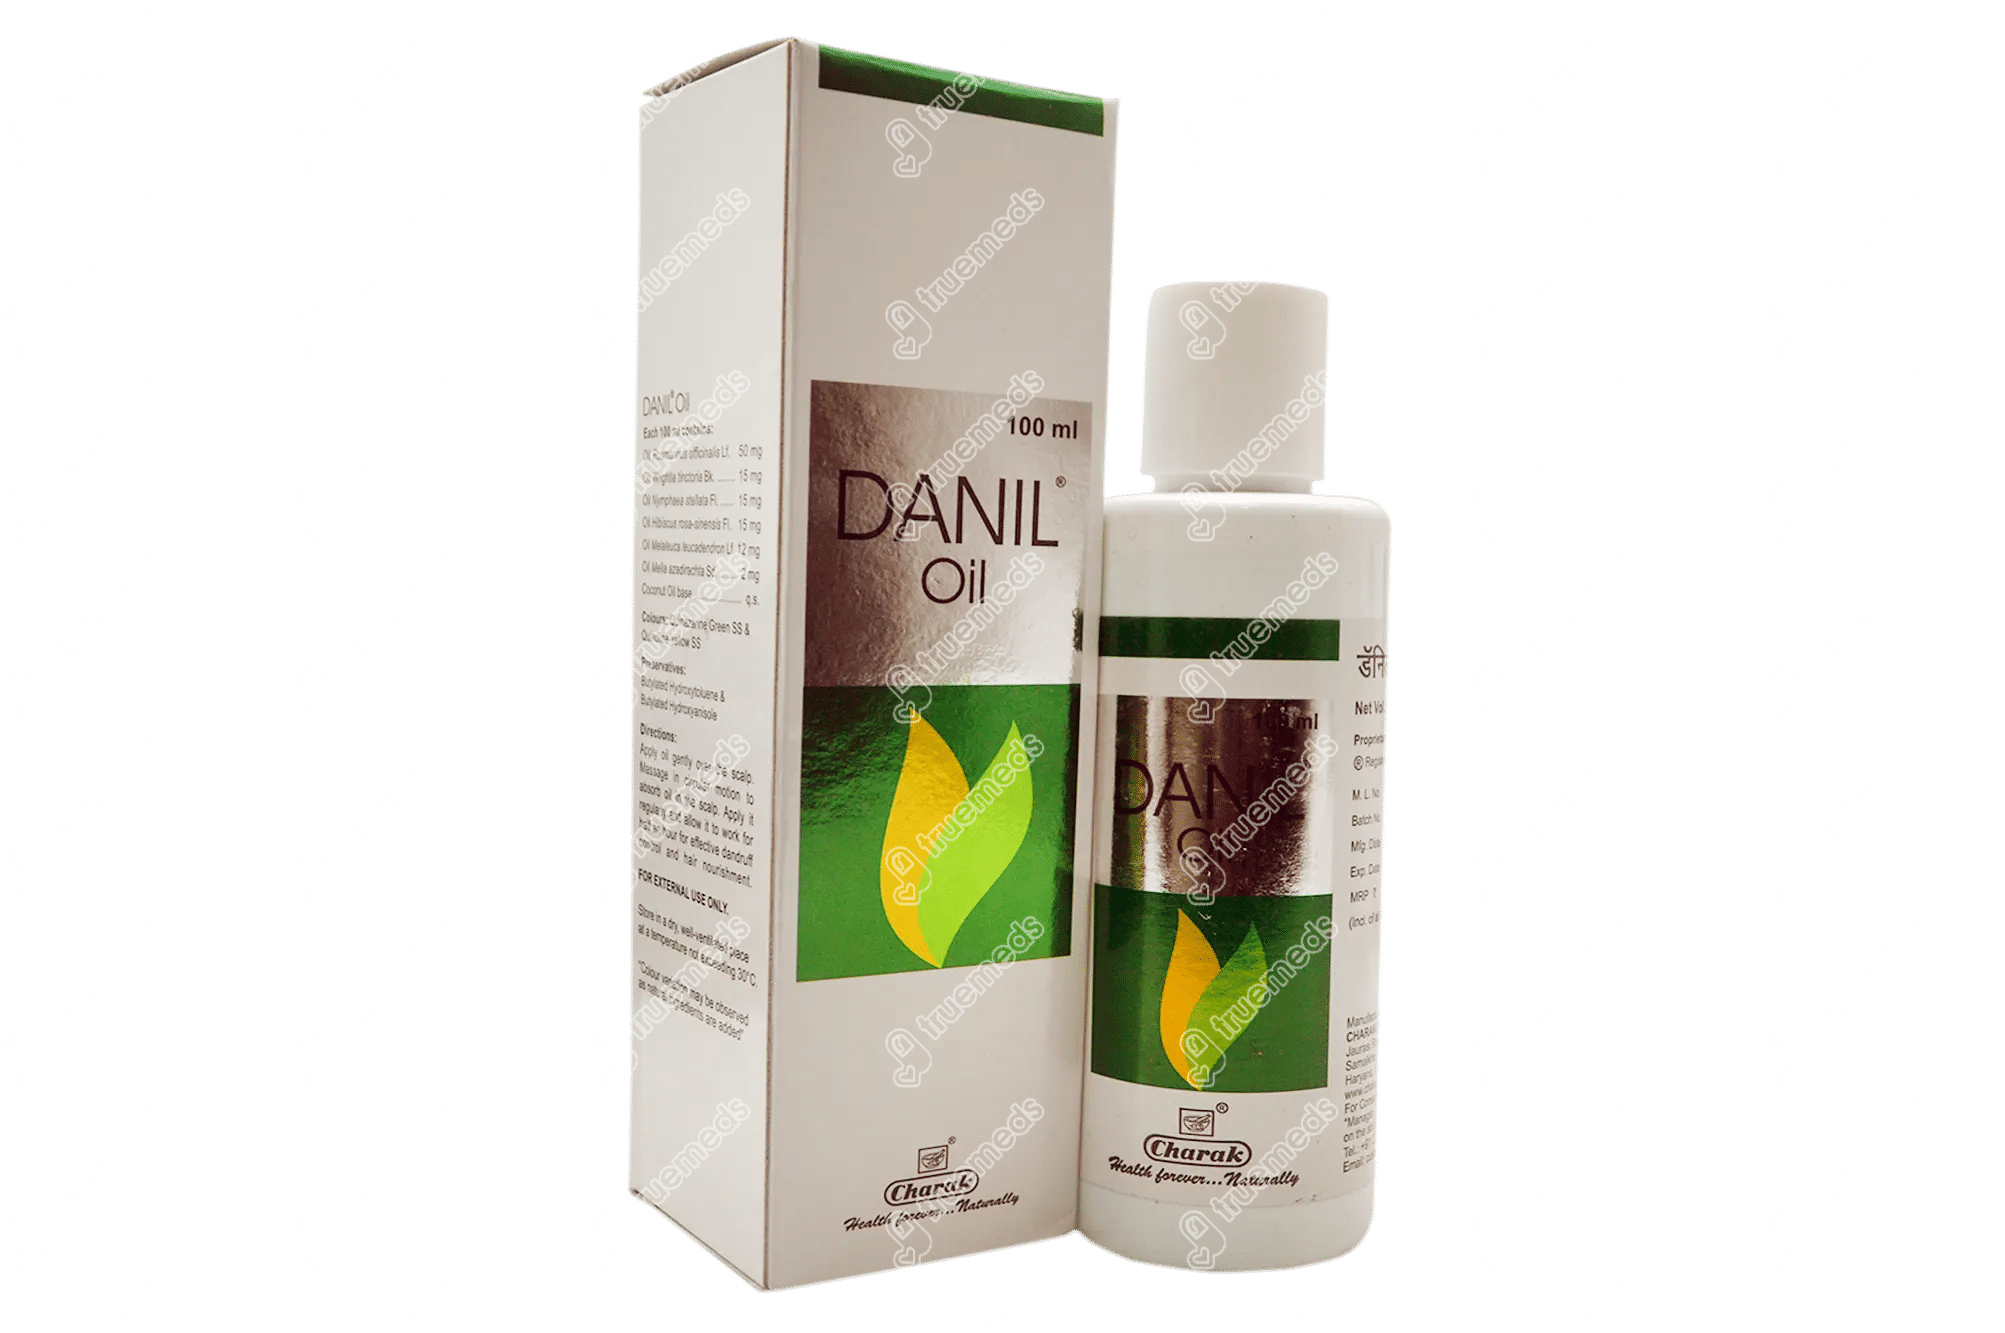 Danil Oil 100 ML - Uses, Side Effects, Dosage, Price | Truemeds